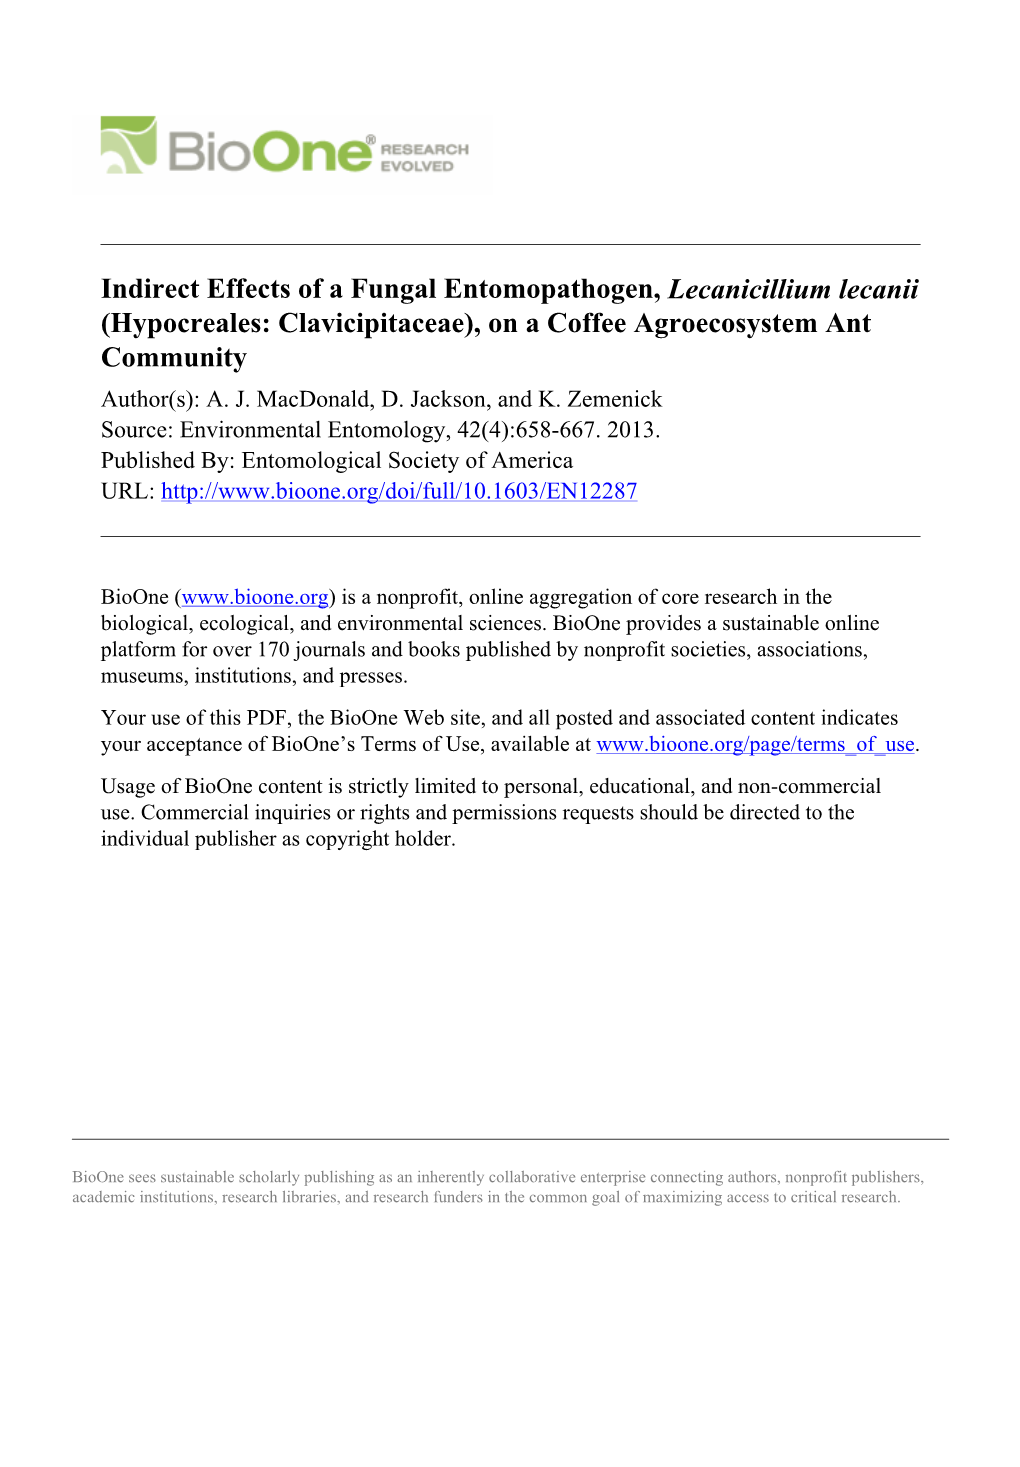 Indirect Effects of a Fungal Entomopathogen, Lecanicillium Lecanii (Hypocreales: Clavicipitaceae), on a Coffee Agroecosystem Ant Community Author(S): A